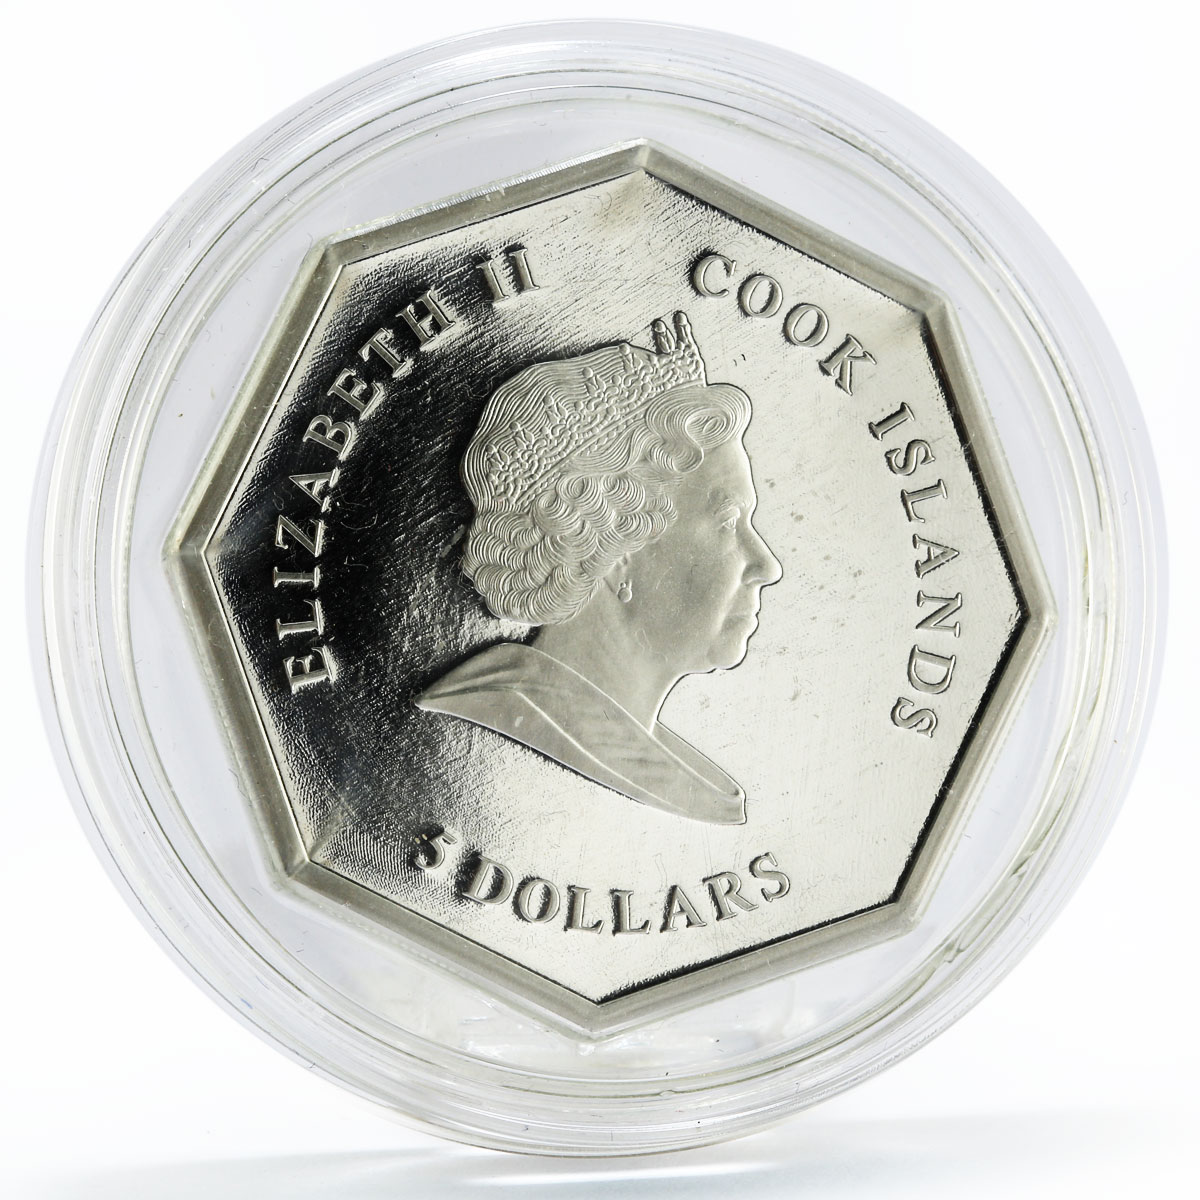 Cook Islands 5 dollars Faith series Saint Catherine proof silver coin 2011